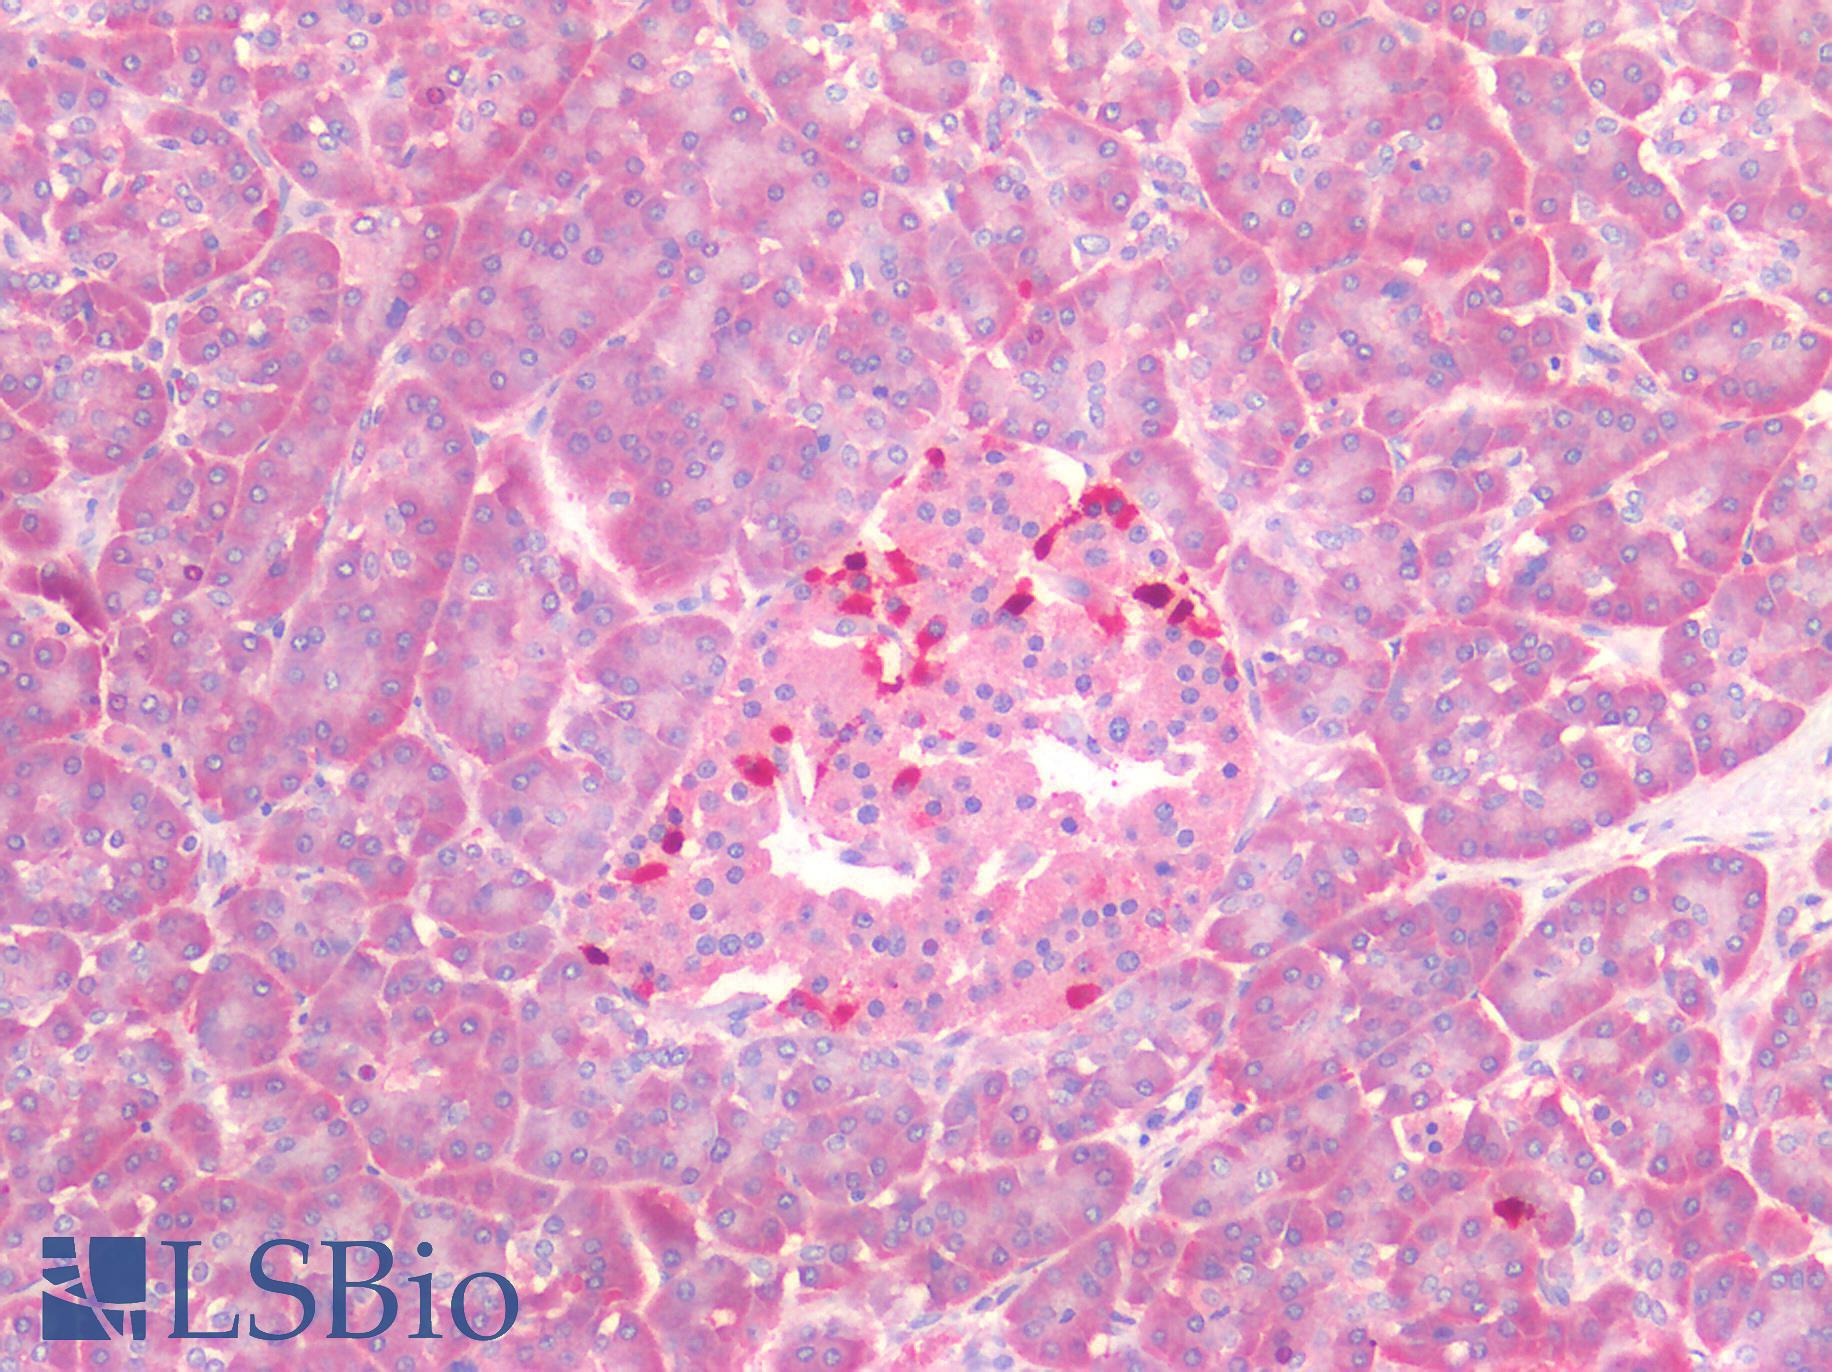 MYC / c-Myc Antibody - Human Pancreas: Formalin-Fixed, Paraffin-Embedded (FFPE)